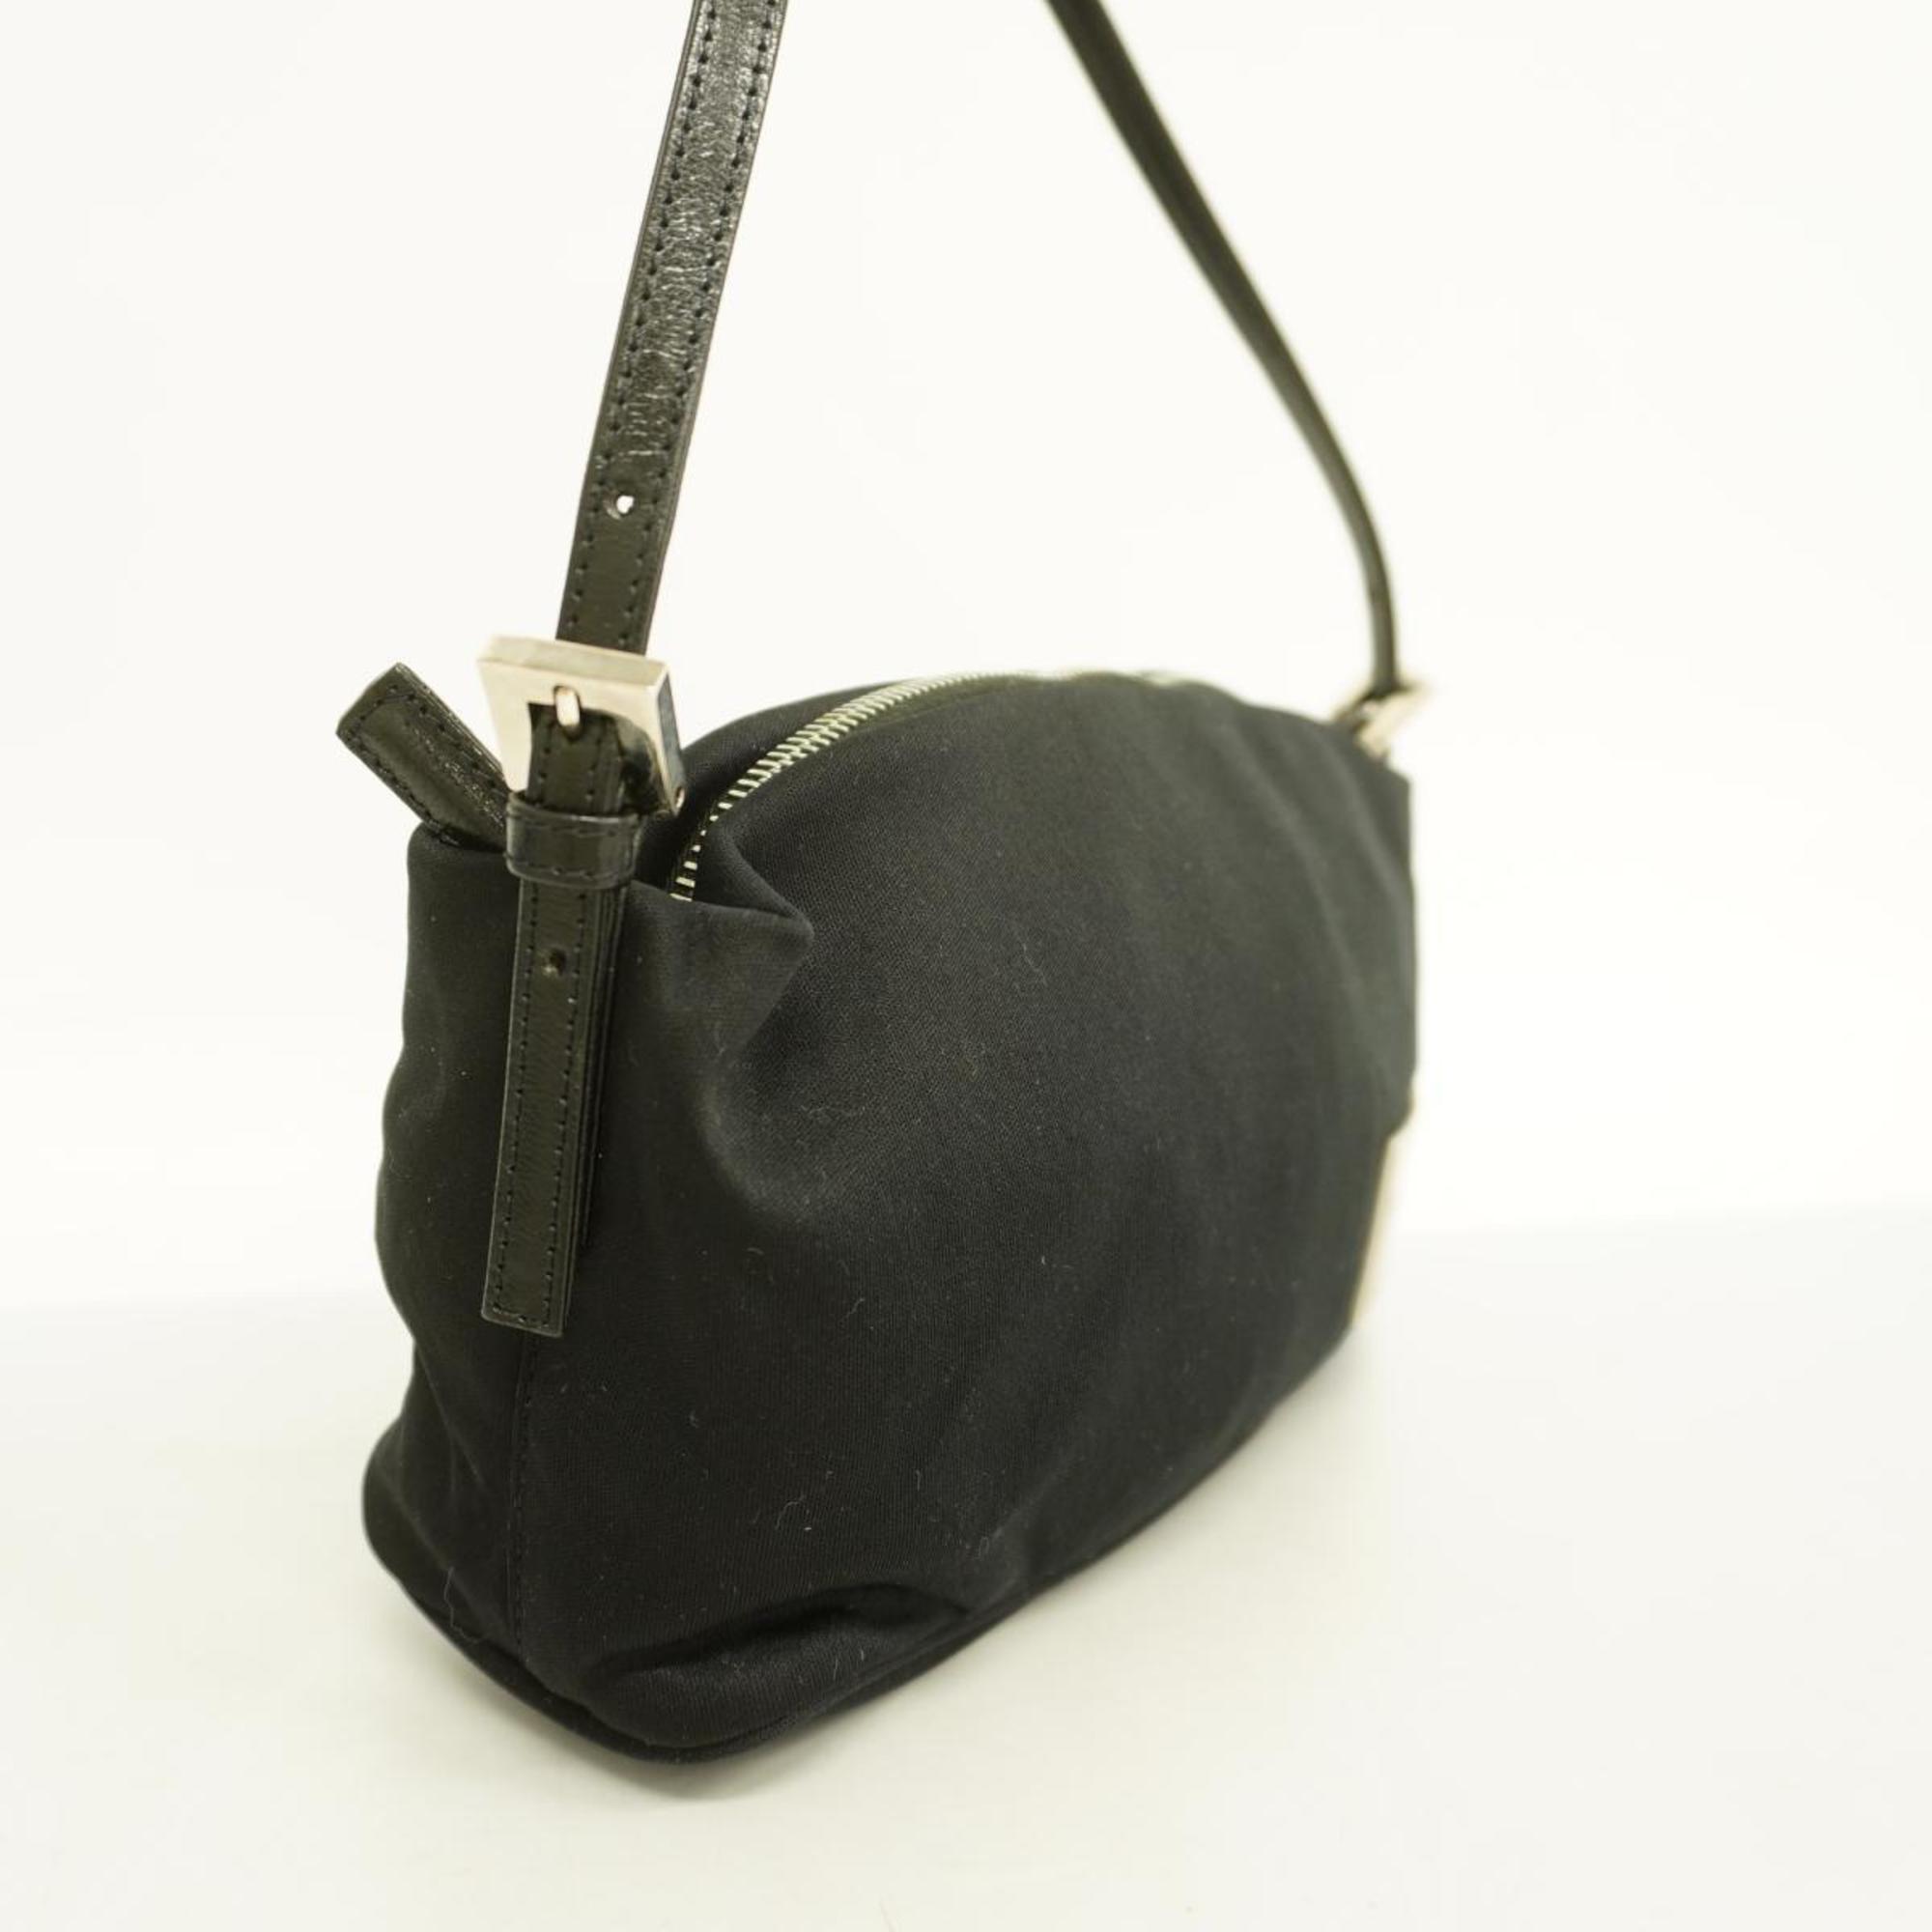 Fendi handbag suede black ladies